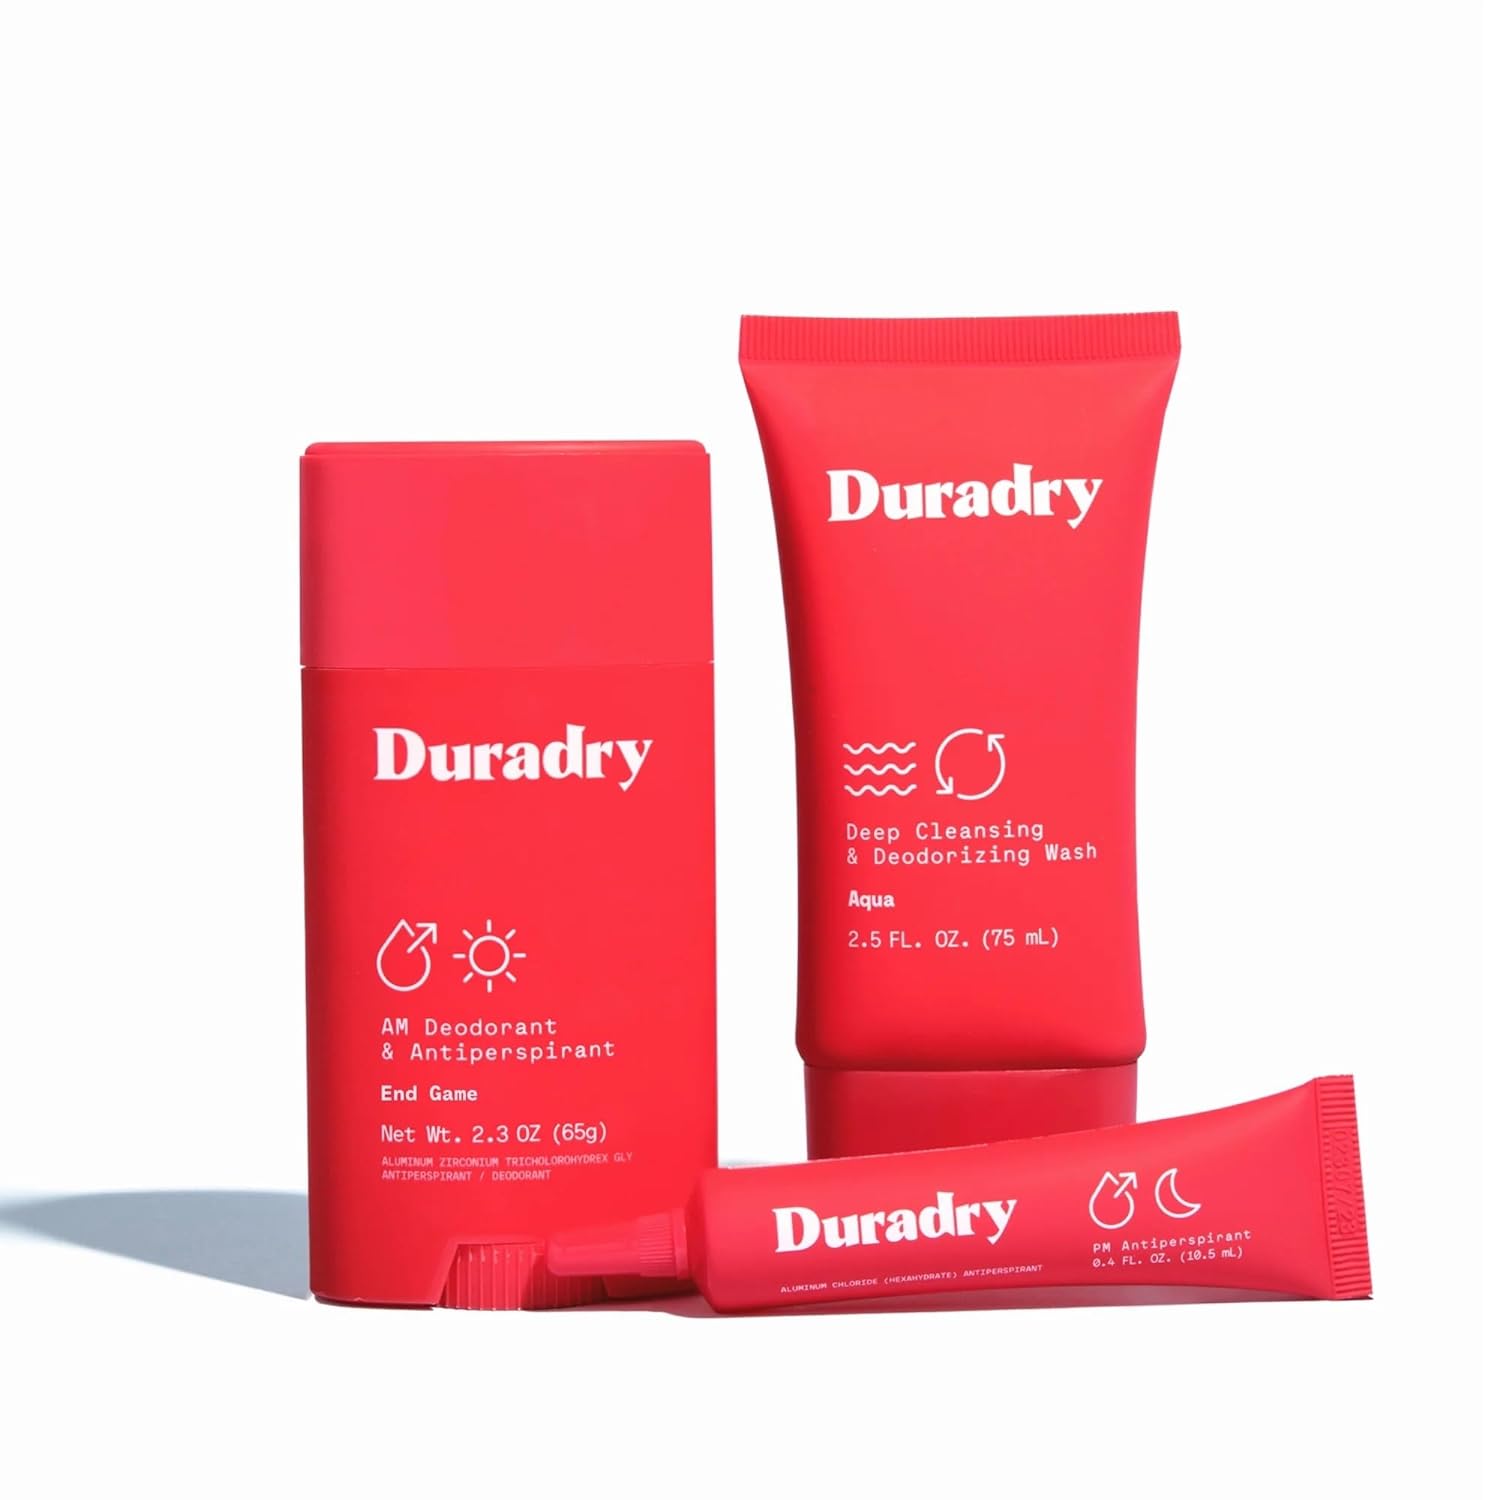 Duradry 3-Step Protection System - AM Deodorant, PM Antiperspirant Gel, Deep Cleansing & Deodorizing Body Wash, Prescription Strength, Excessive Sweating, Hyperhidrosis, Block Sweat & Odor - End Game